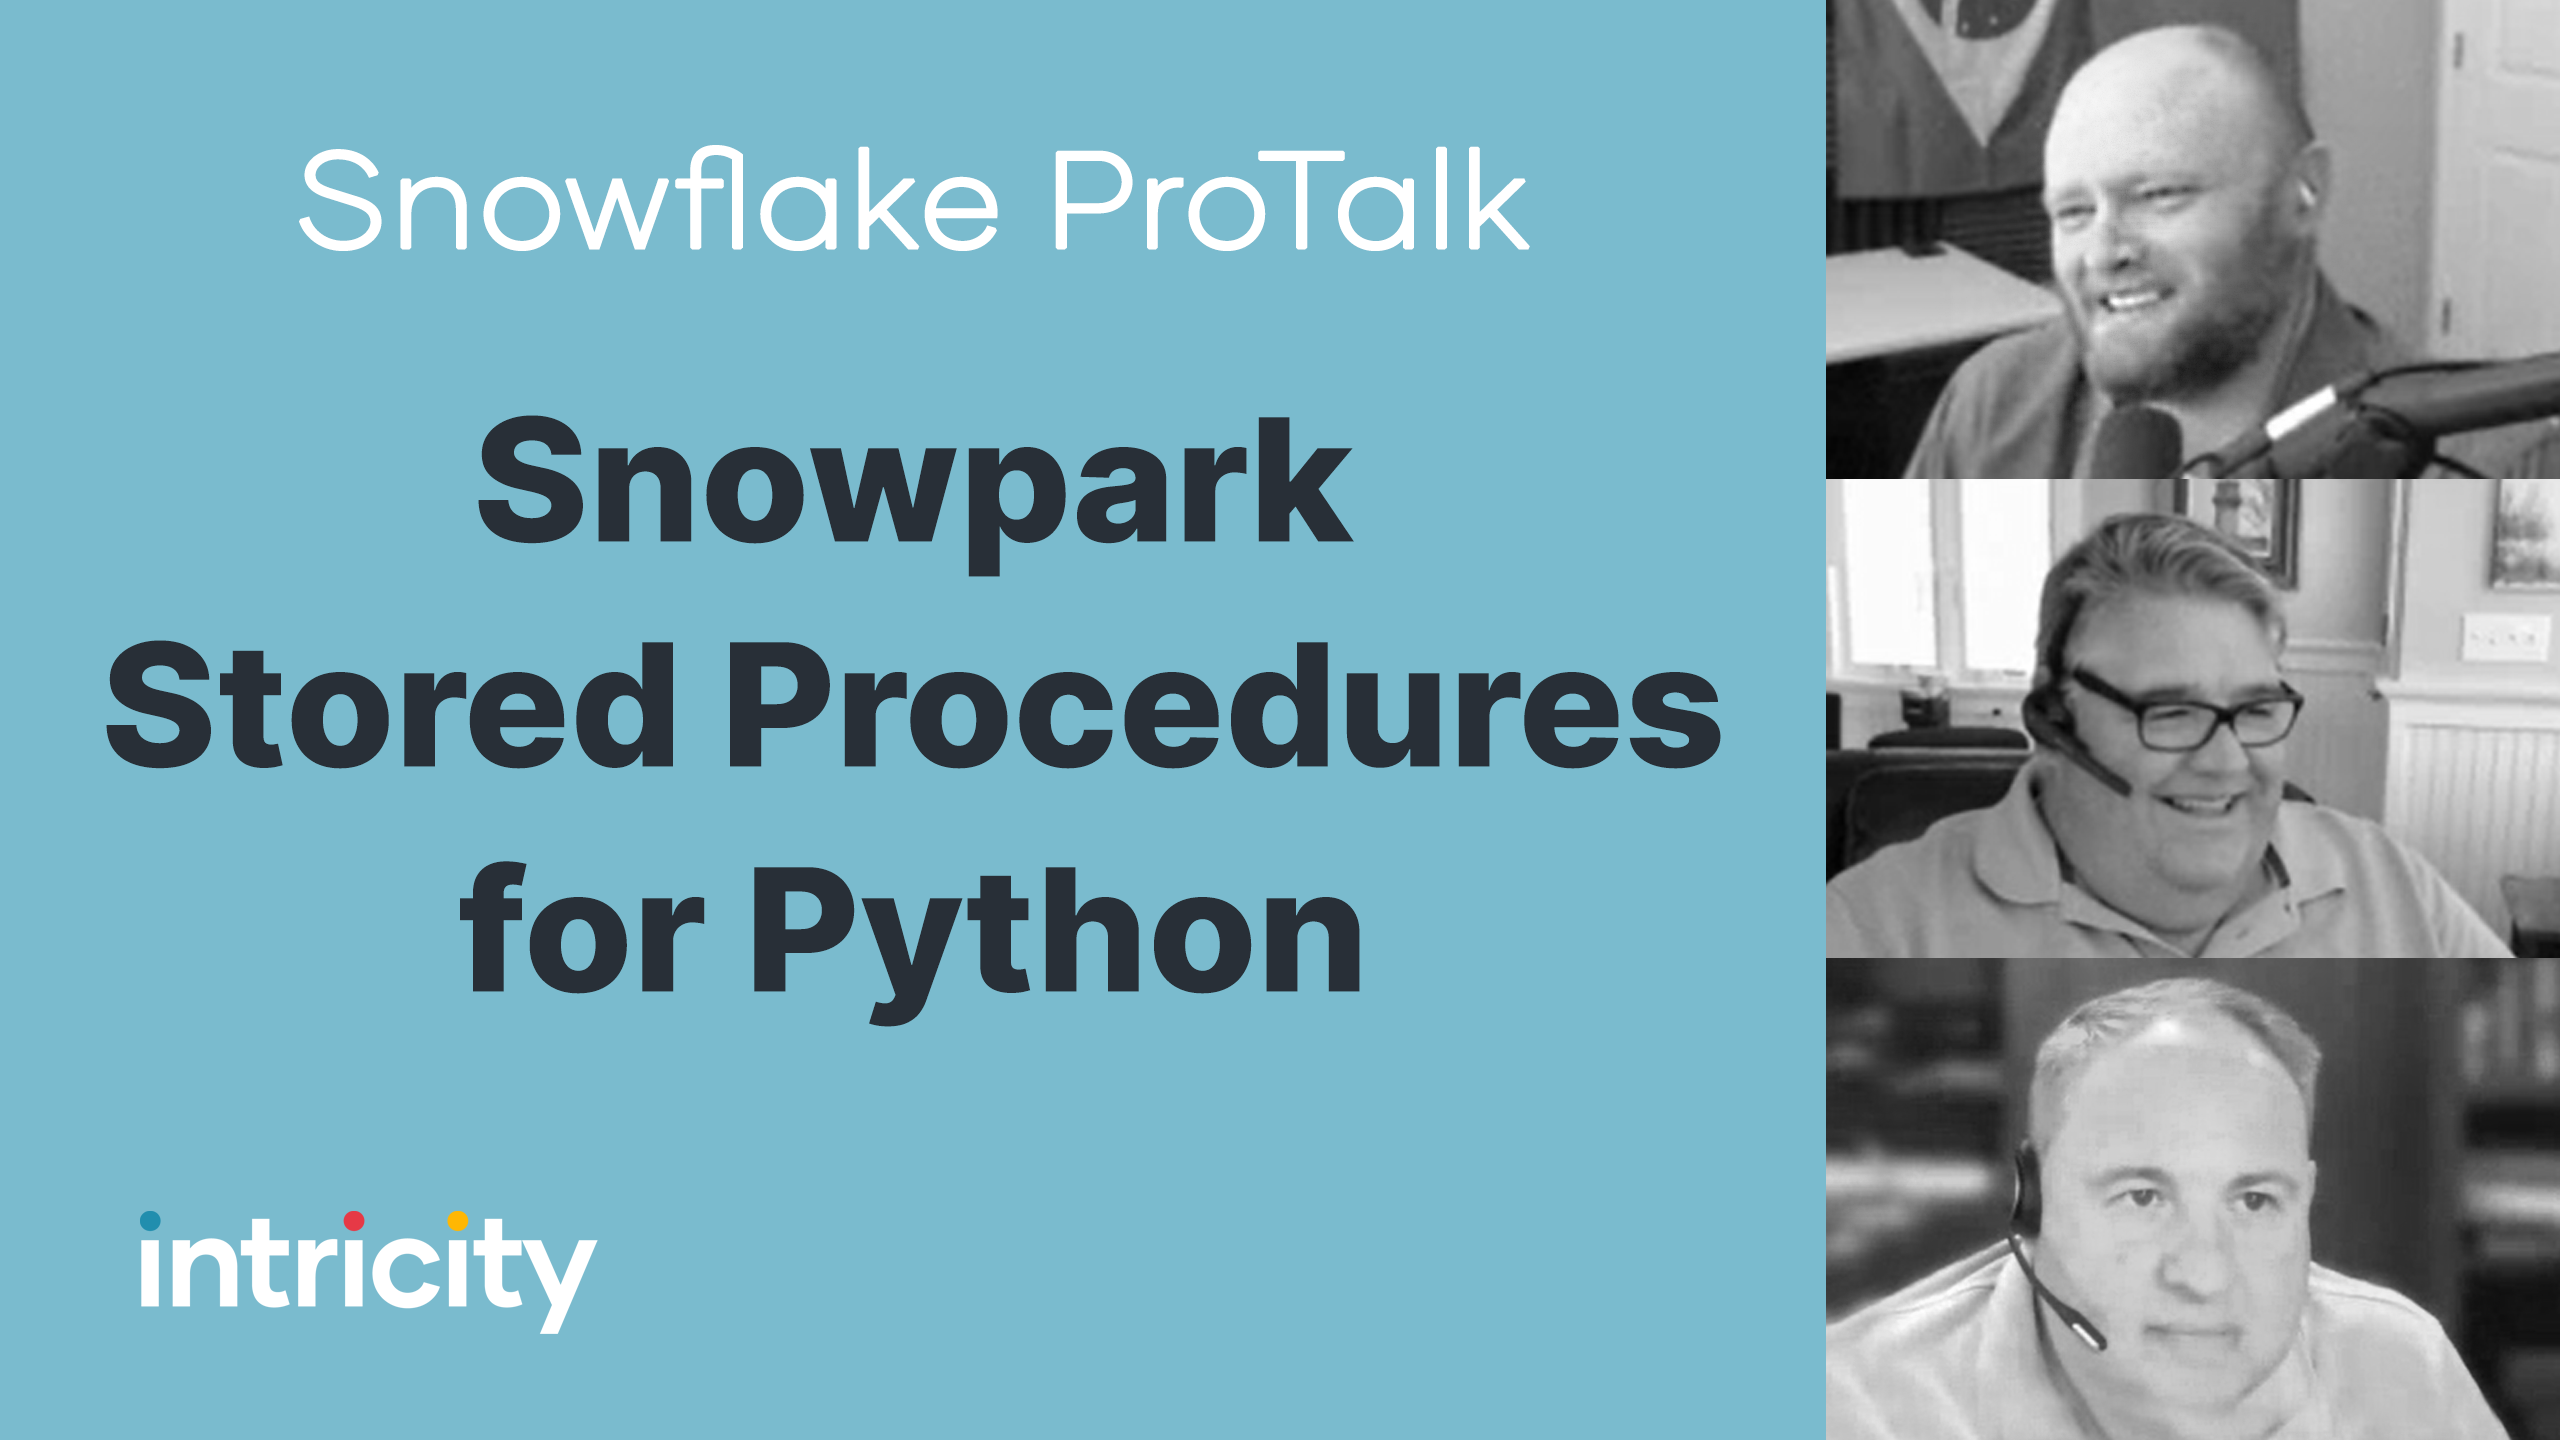 Snowflake ProTalk: Snowpark Stored Procedures for Python